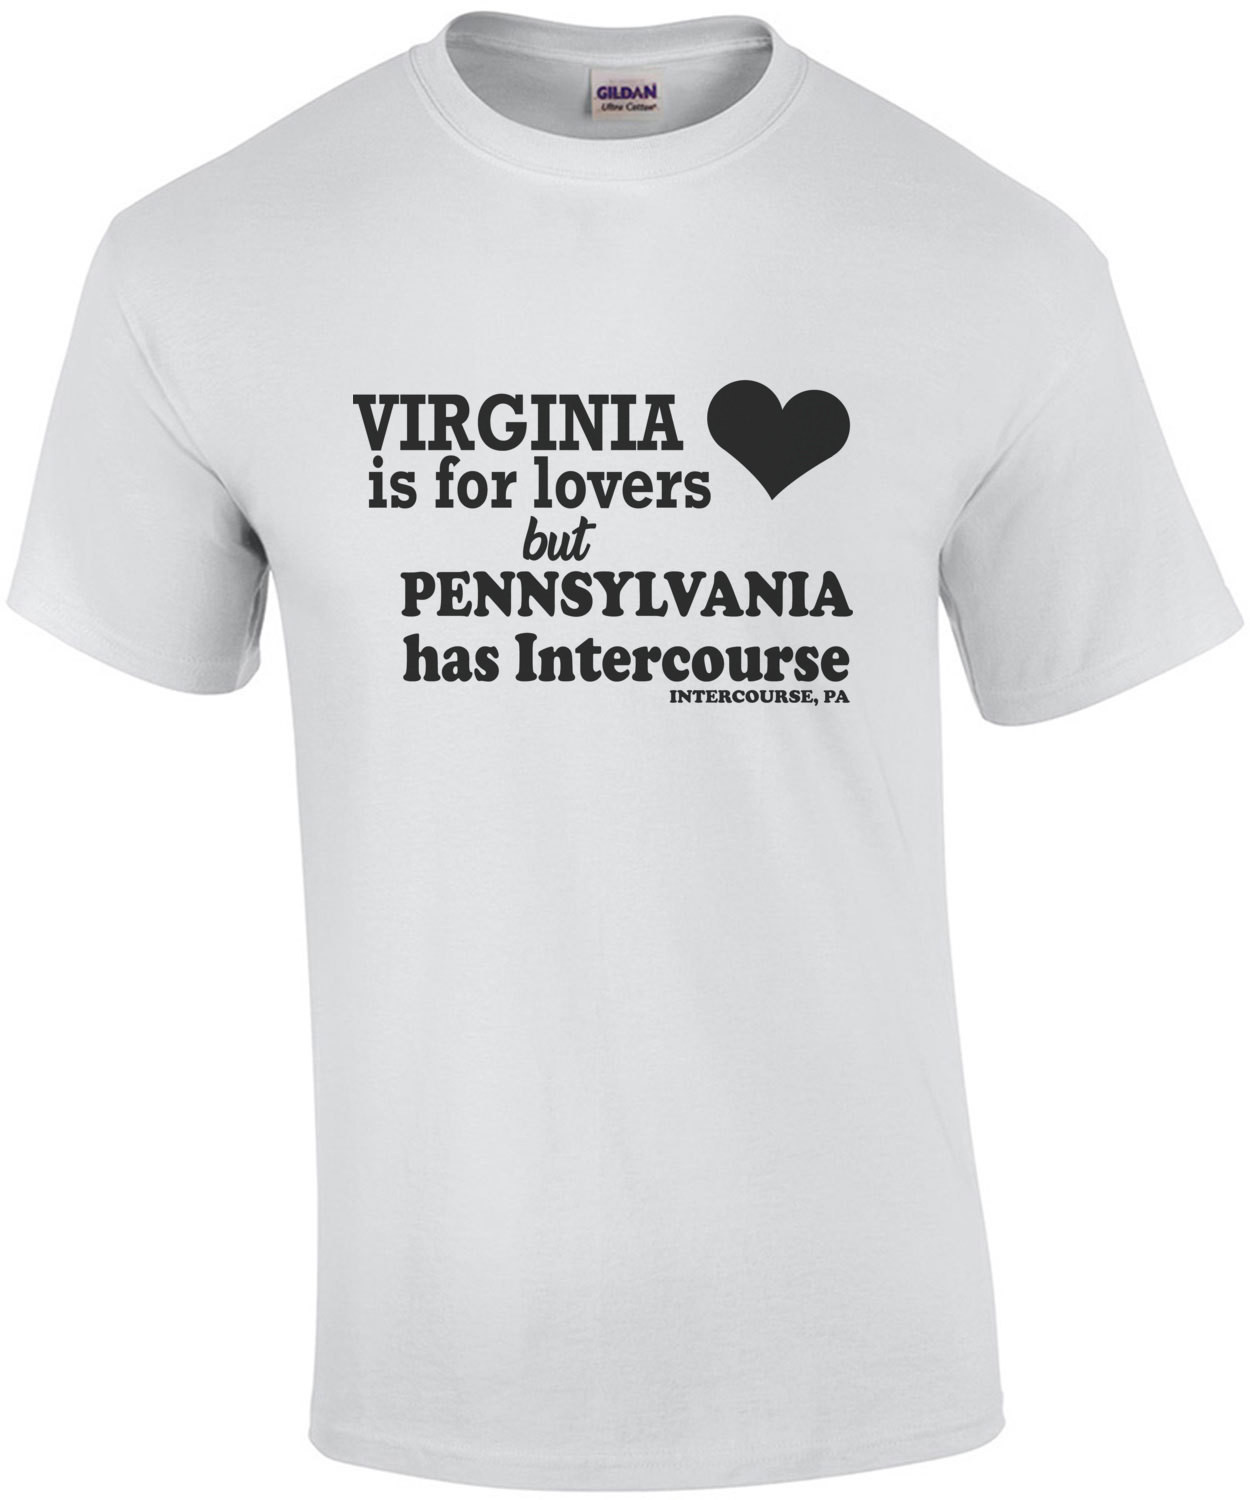 Virginia is for lovers but Pennsylvania has Intercourse - Pennsylvania T-Shirt